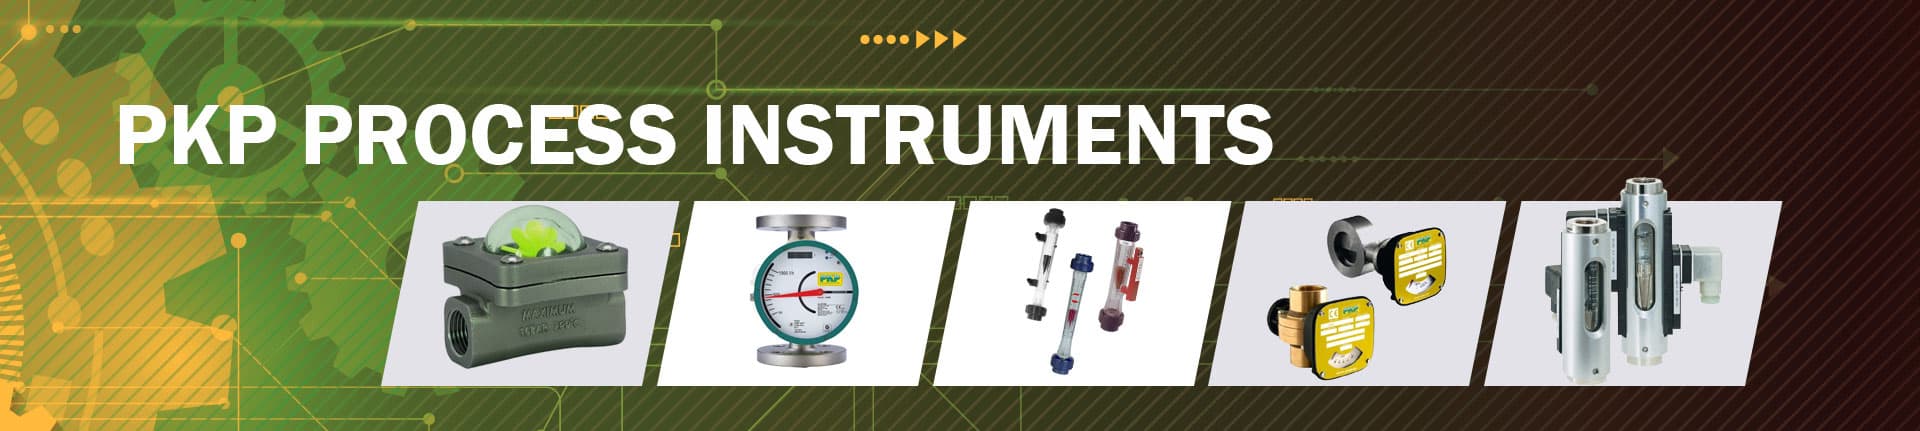 PKP-instruments-sm